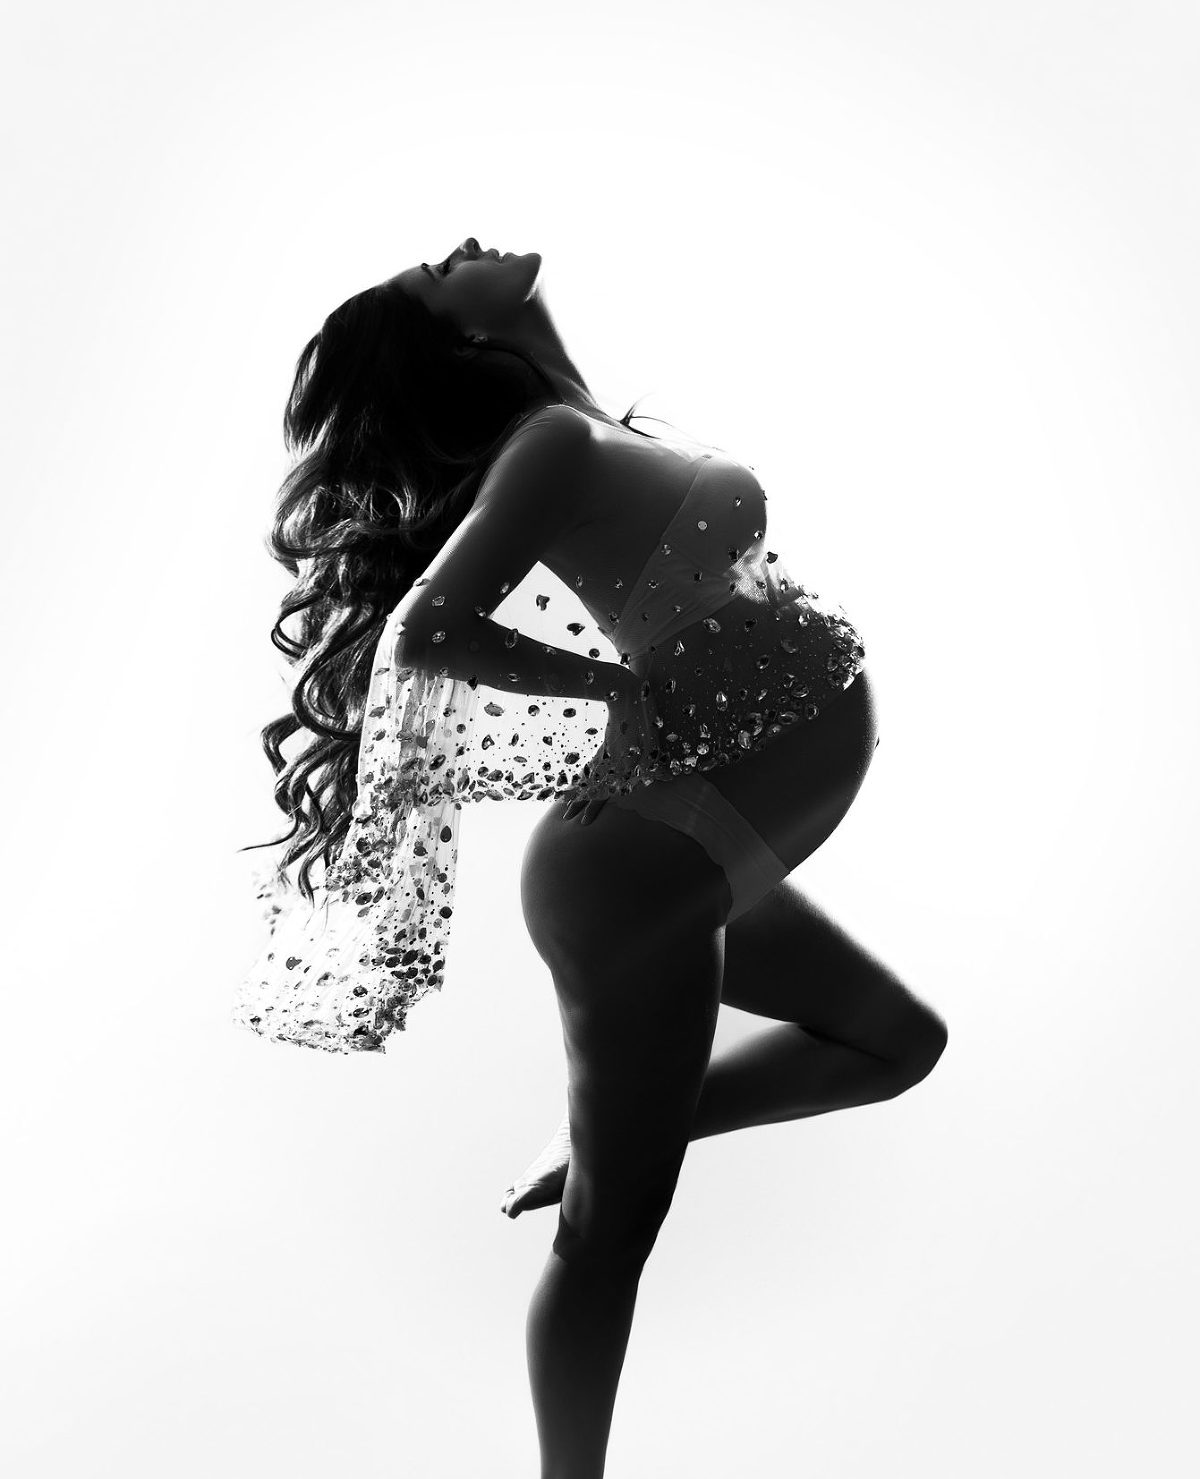 32 Creative Maternity Photoshoot Ideas - Portraits Refined